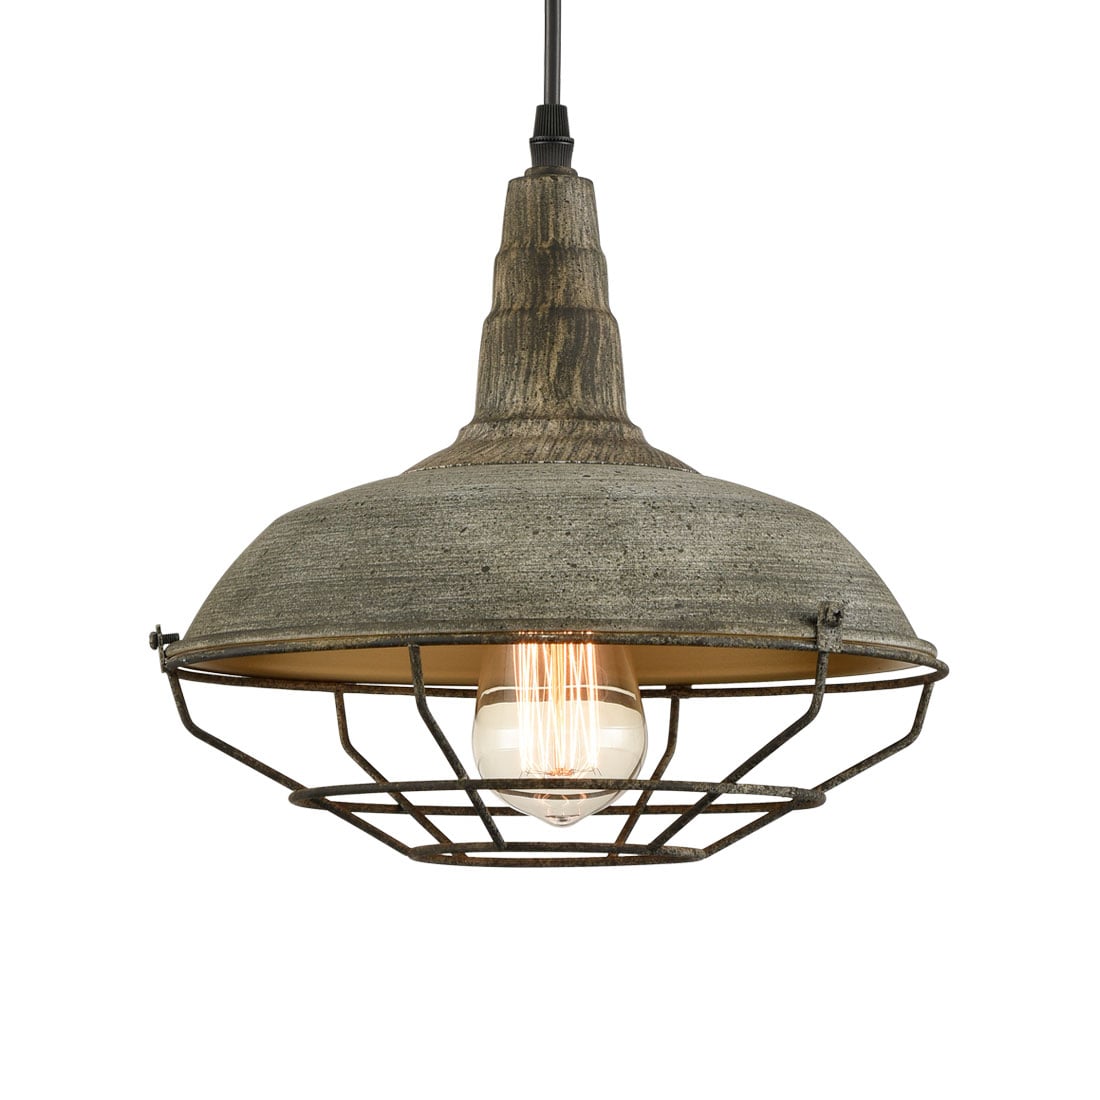 Ceiling Pendant Light, Antique Industrial Lighting Fixtures